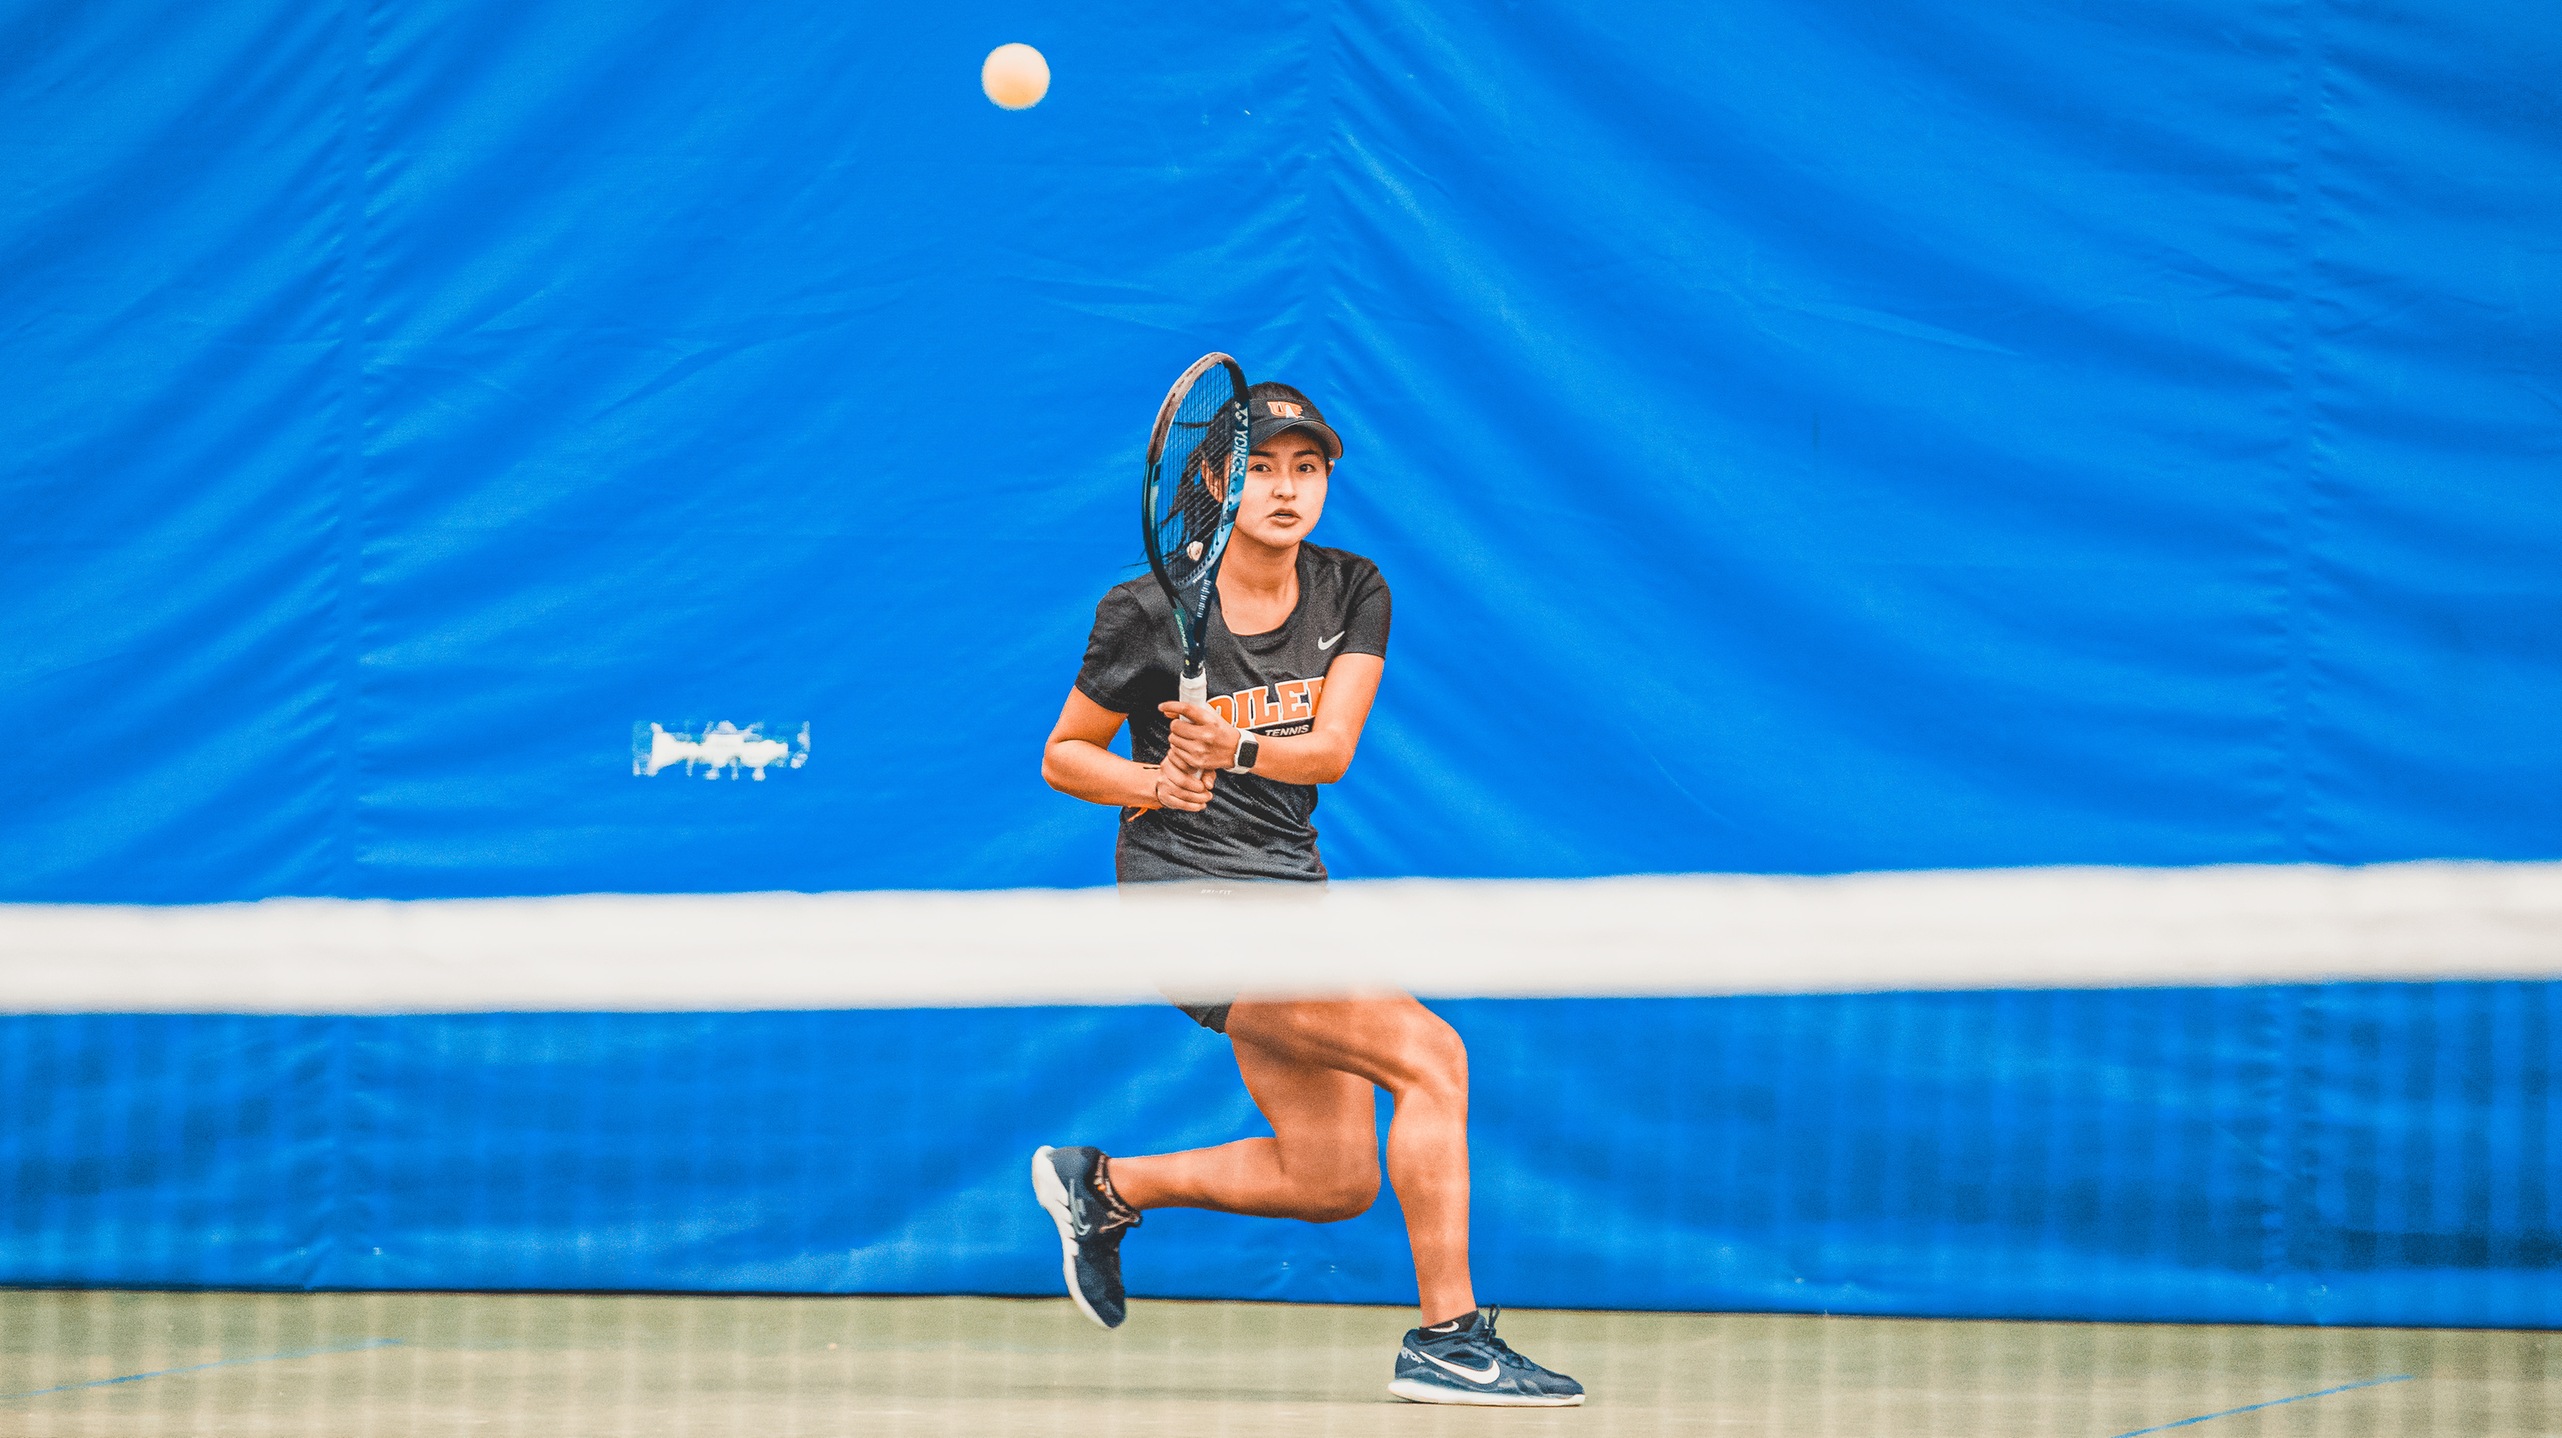 girl in black playing tennis